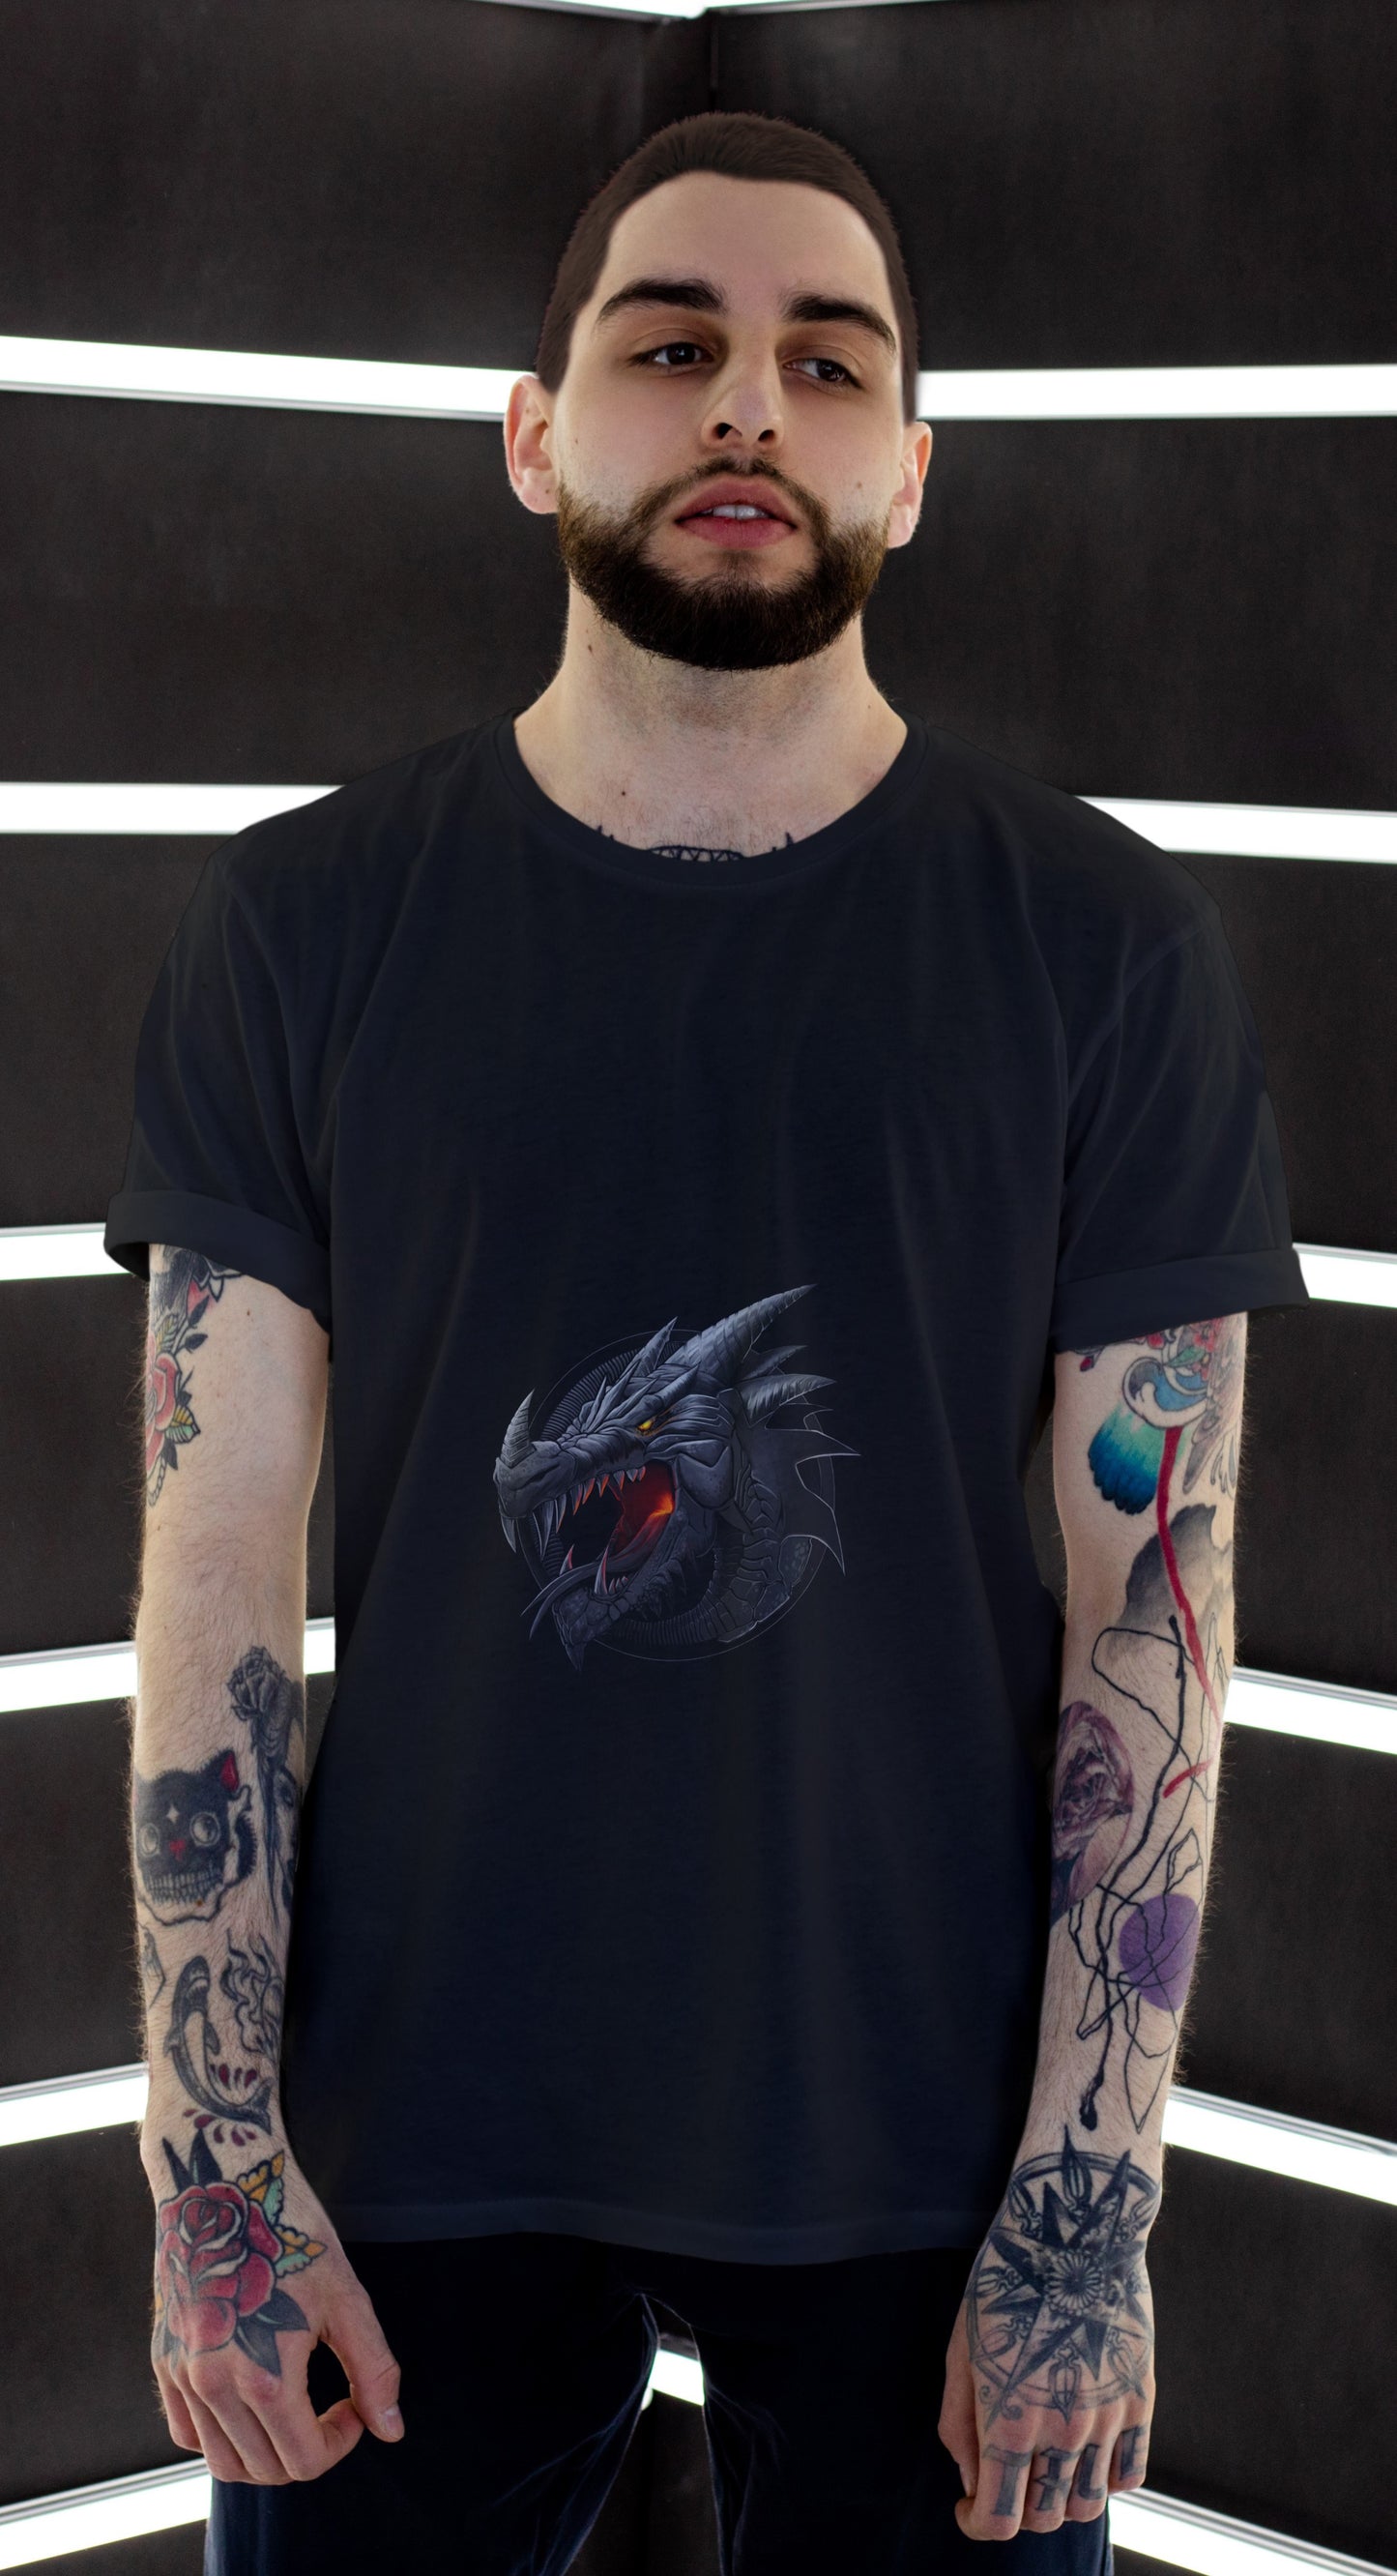 Dragon design t shirt